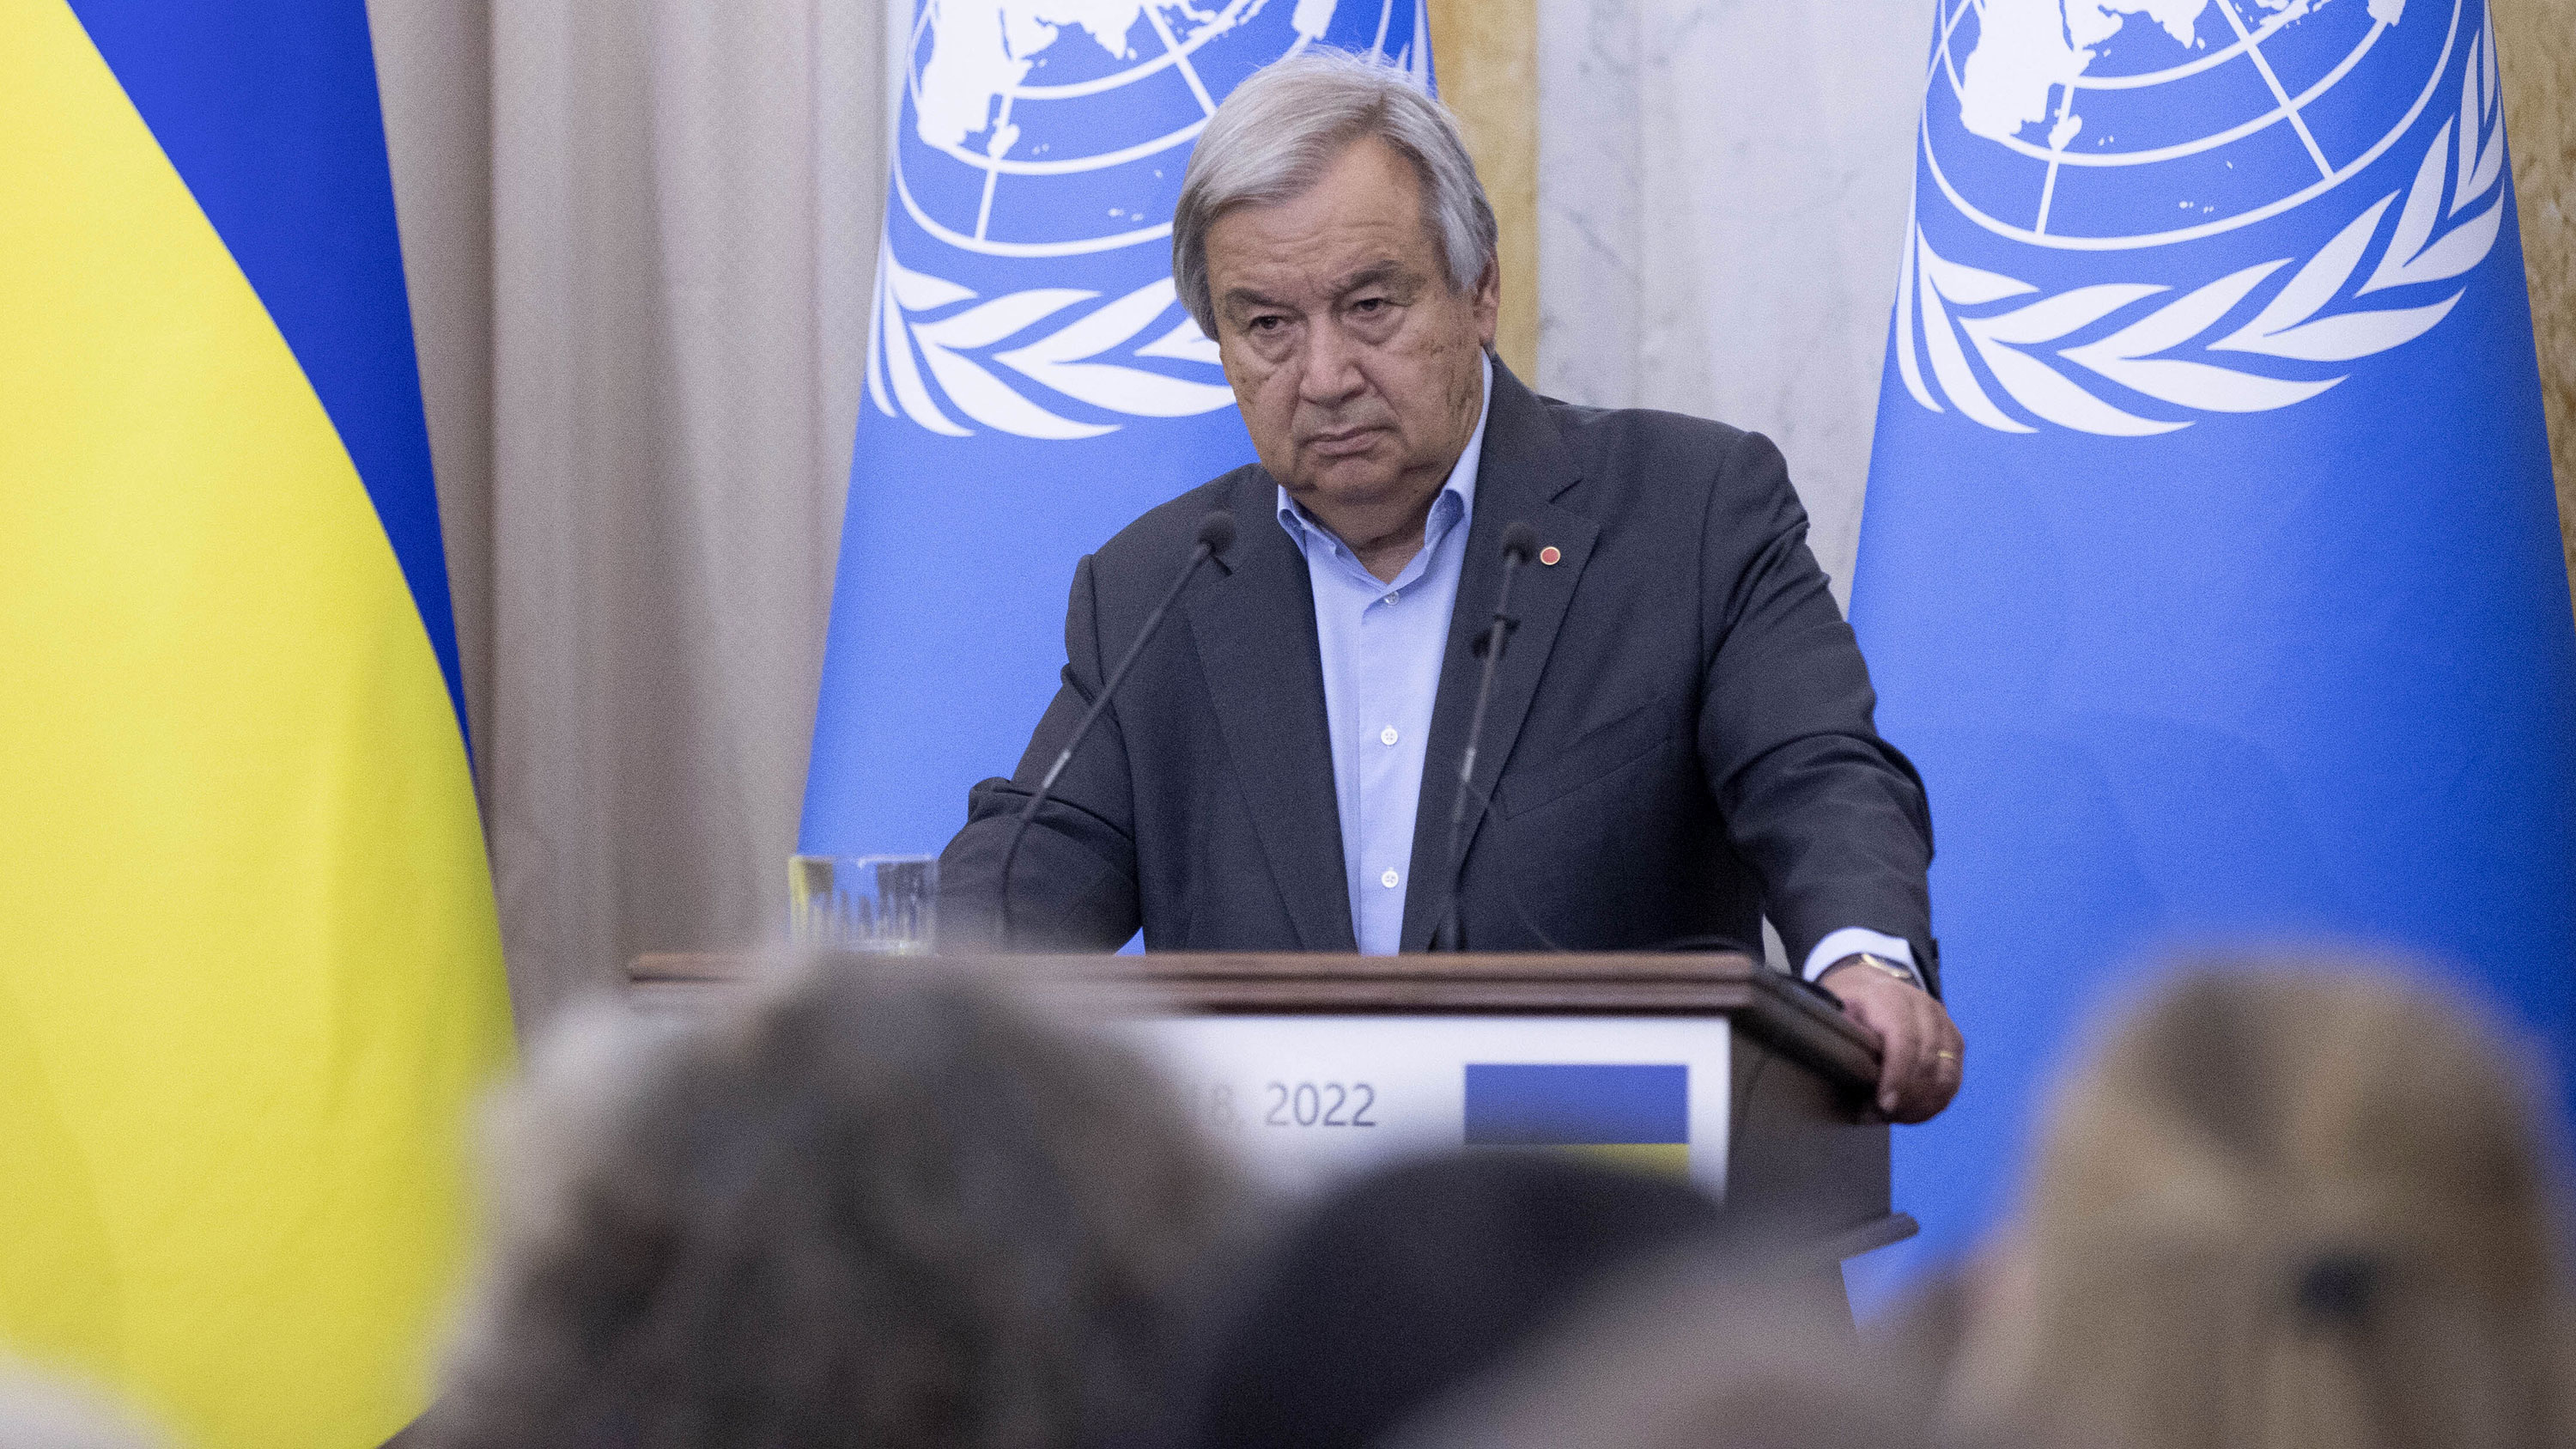 UN Secretary-General Antonio Guterres listens during a news conference in Lviv, Ukraine, on Thursday.